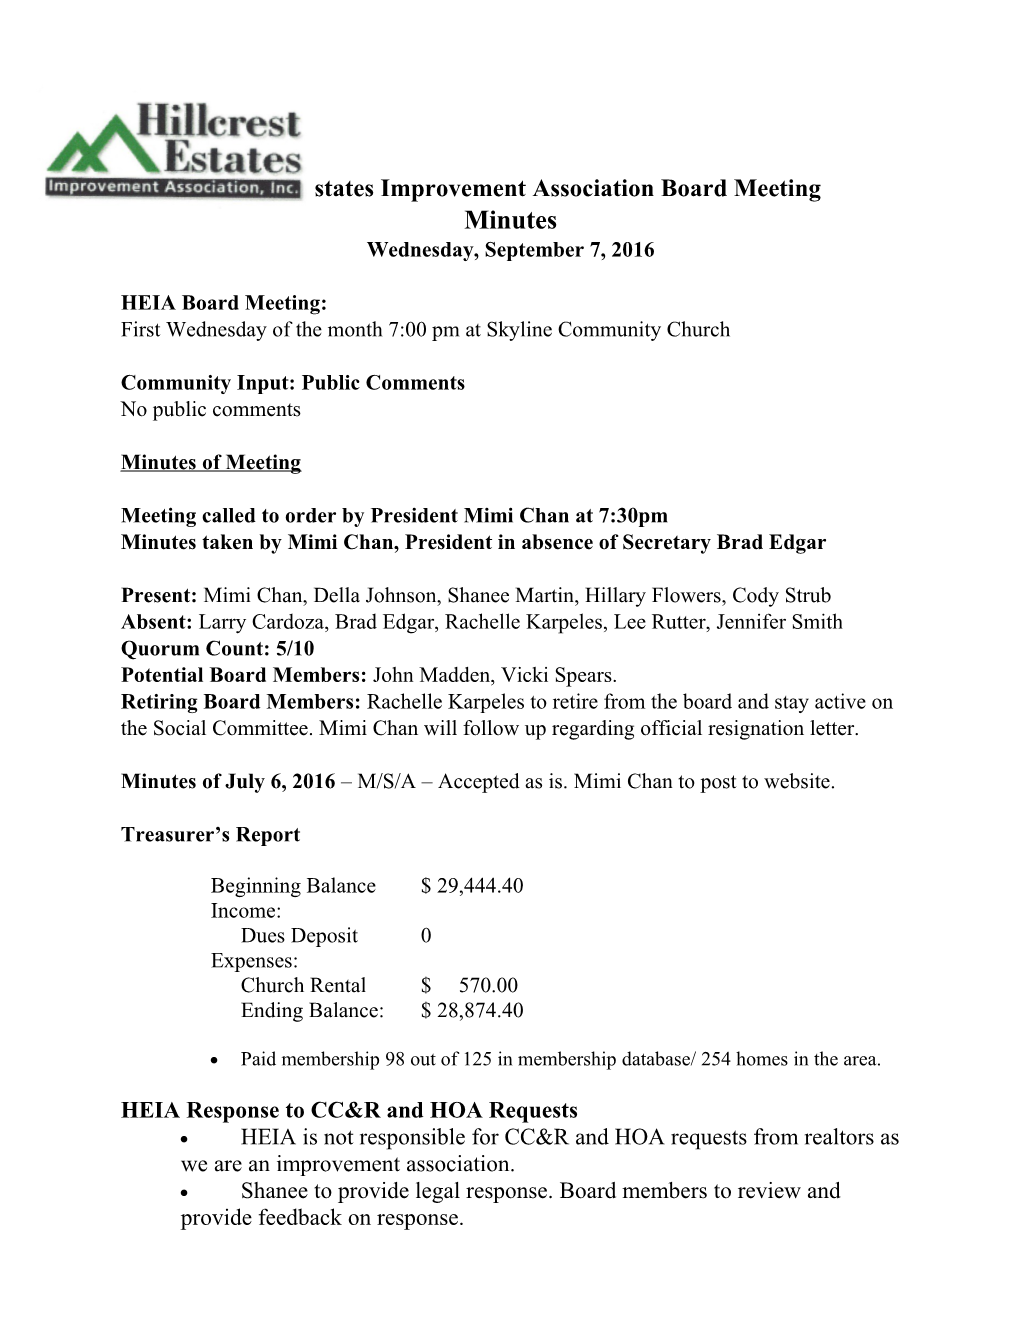 Hillcrest Estates Improvement Association Board Meeting